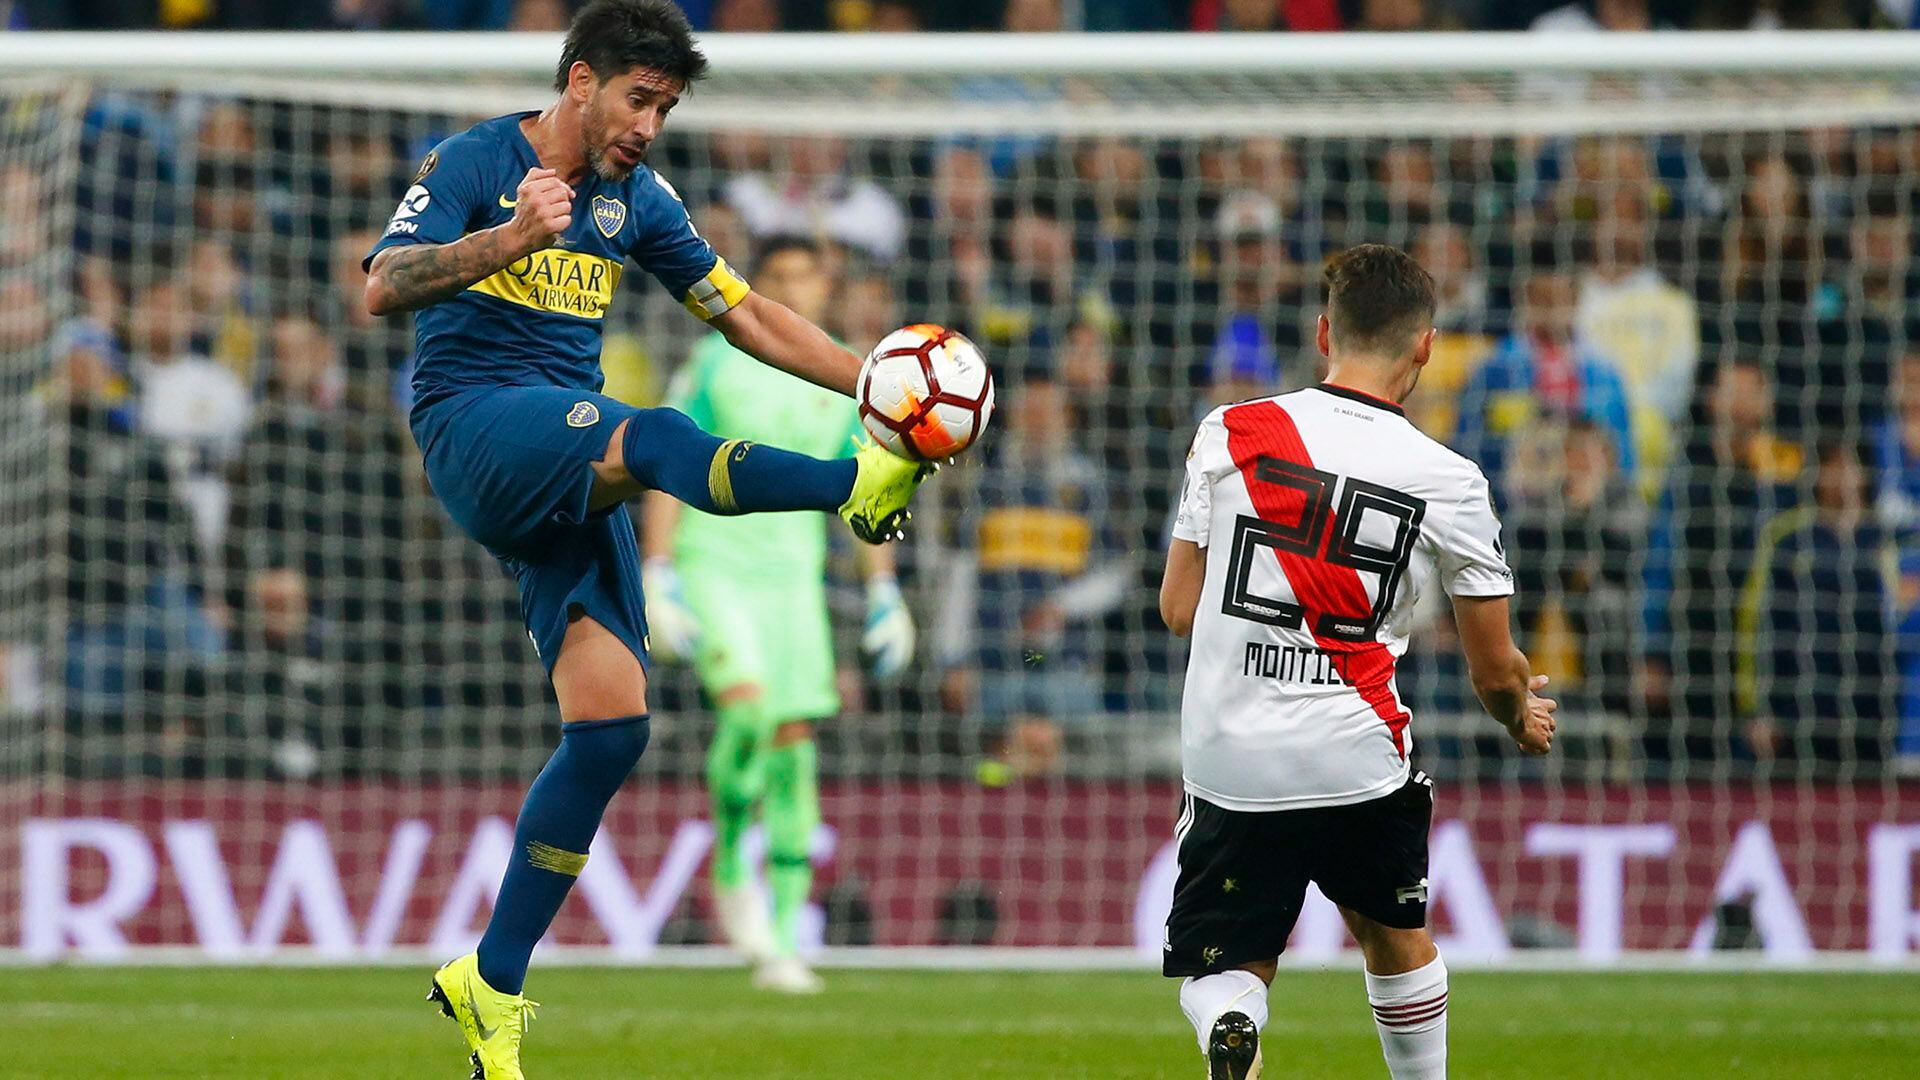 Pablo Pérez lucha por la pelota contra Montiel en la final de la Libertadores 2018 en Madrid (Foto AP/Andrea Comas)